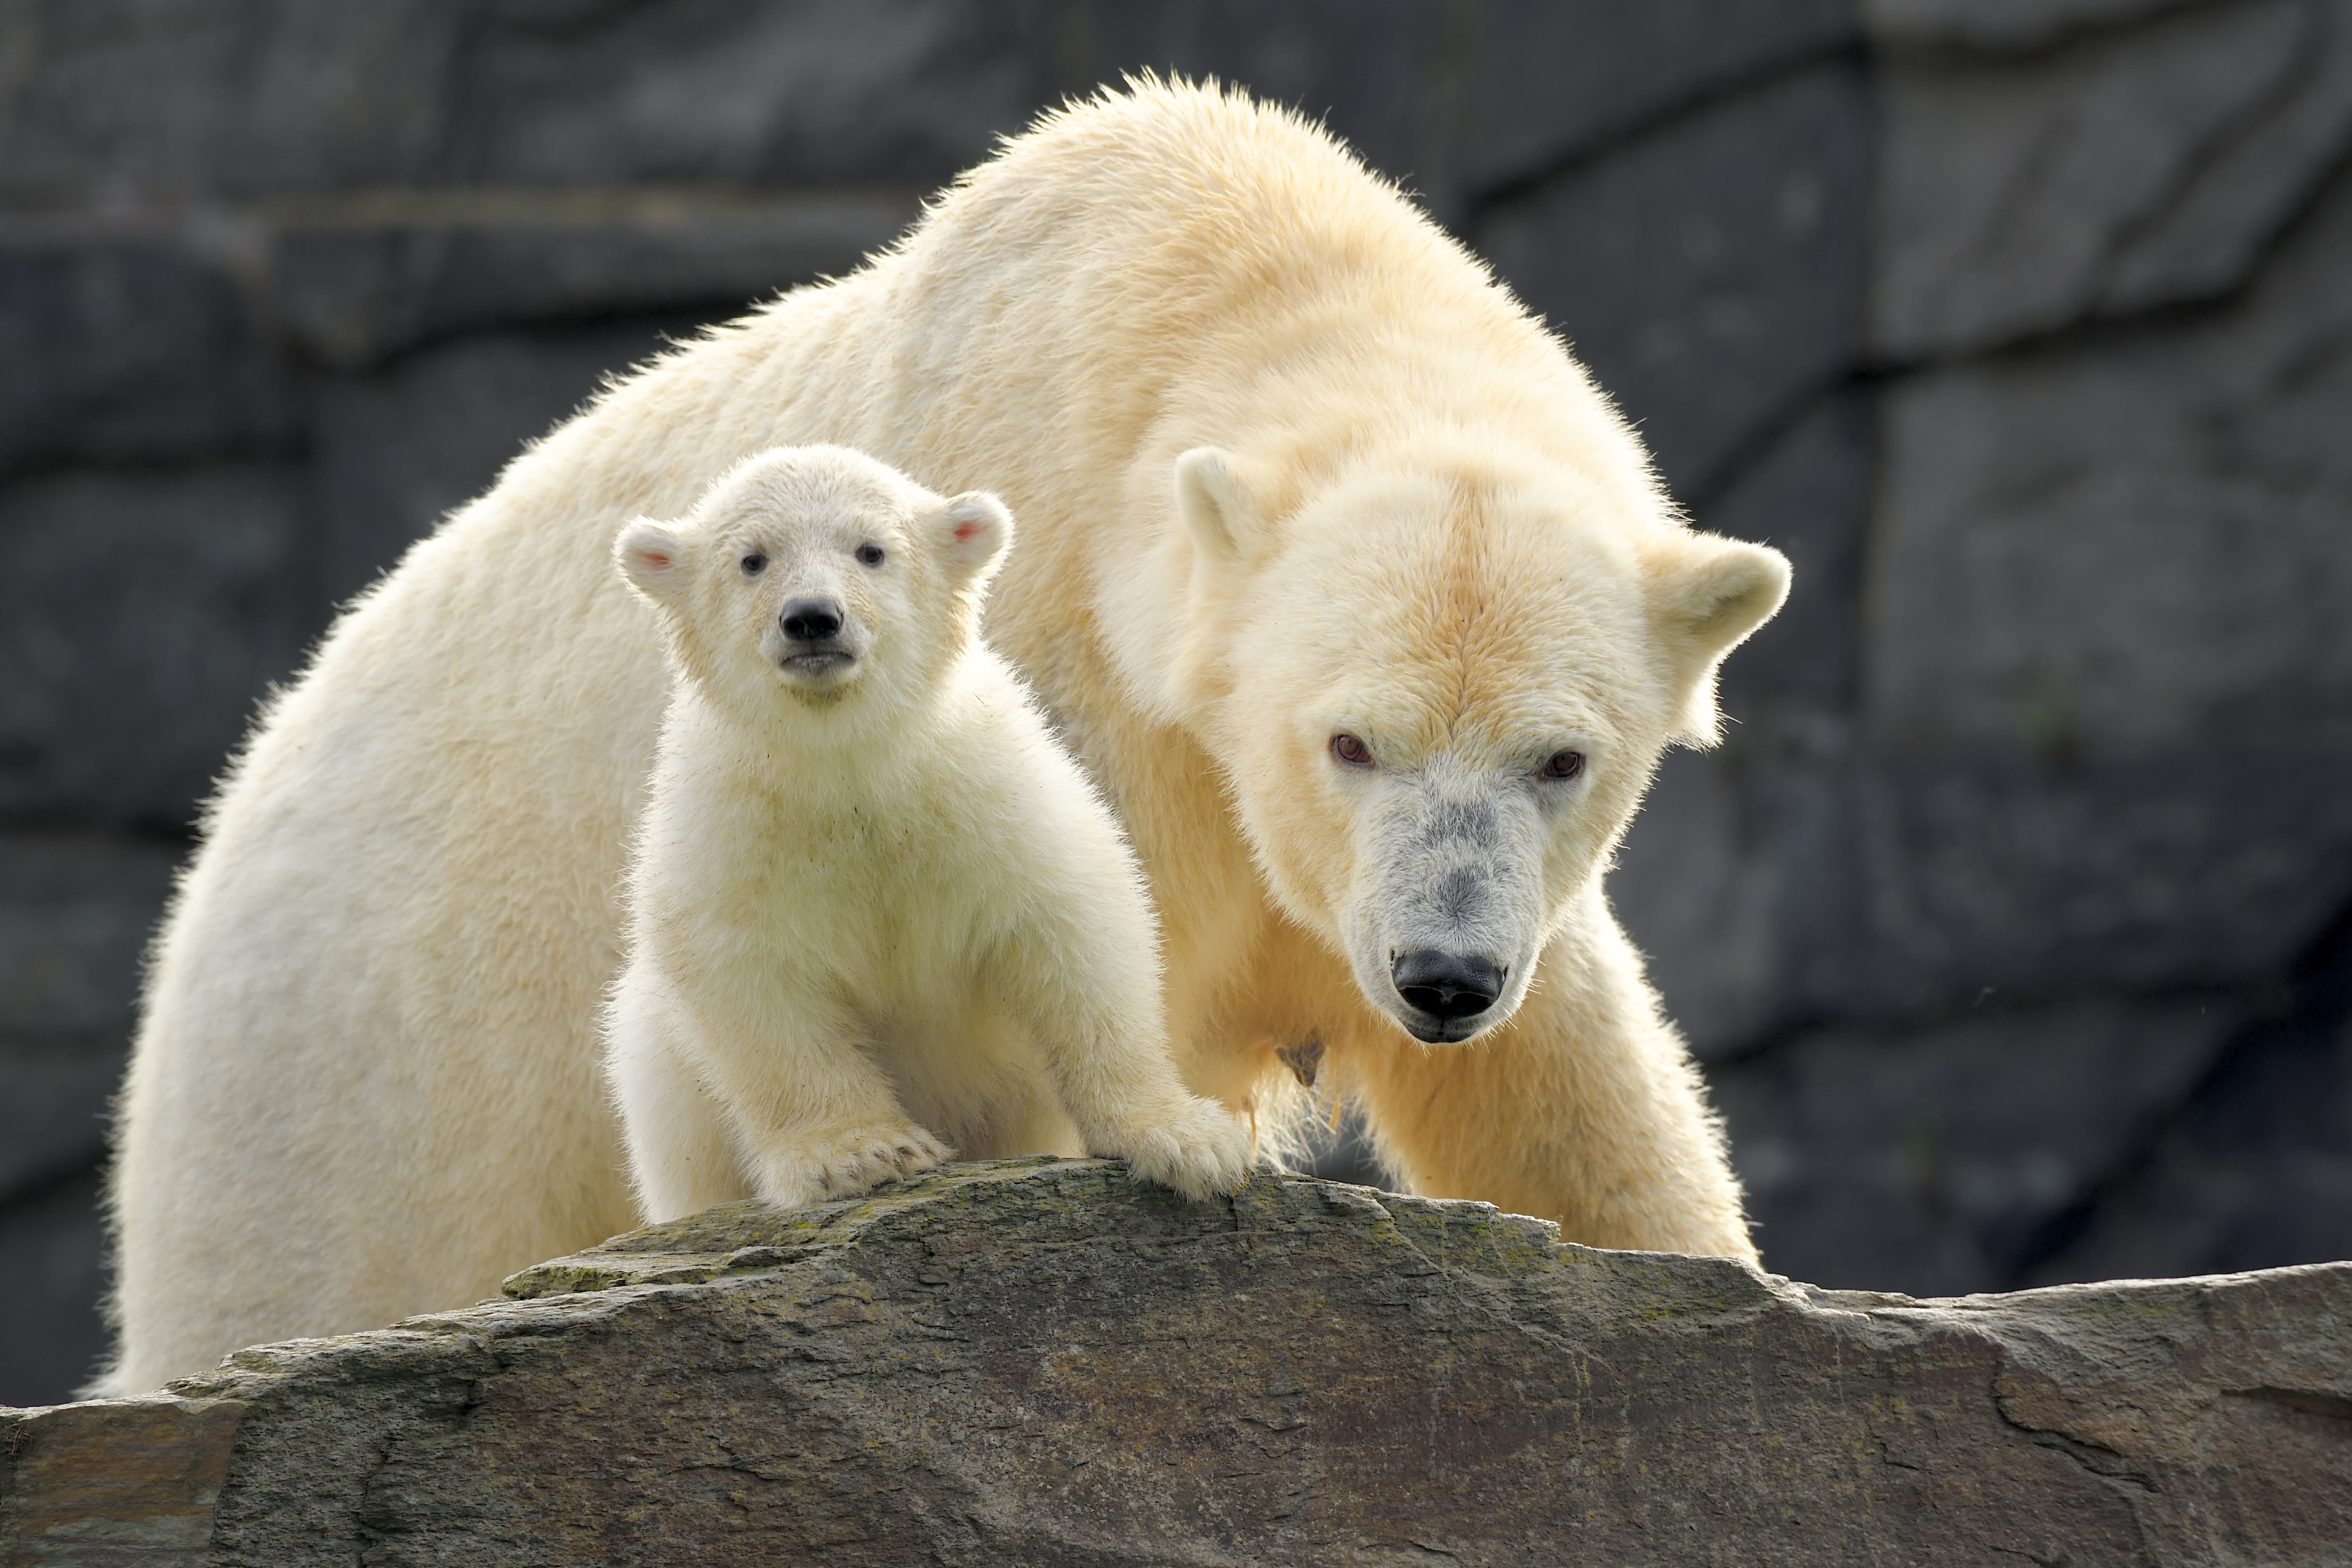 Polar bear Tonya and her young cub at Tierpark Berlin